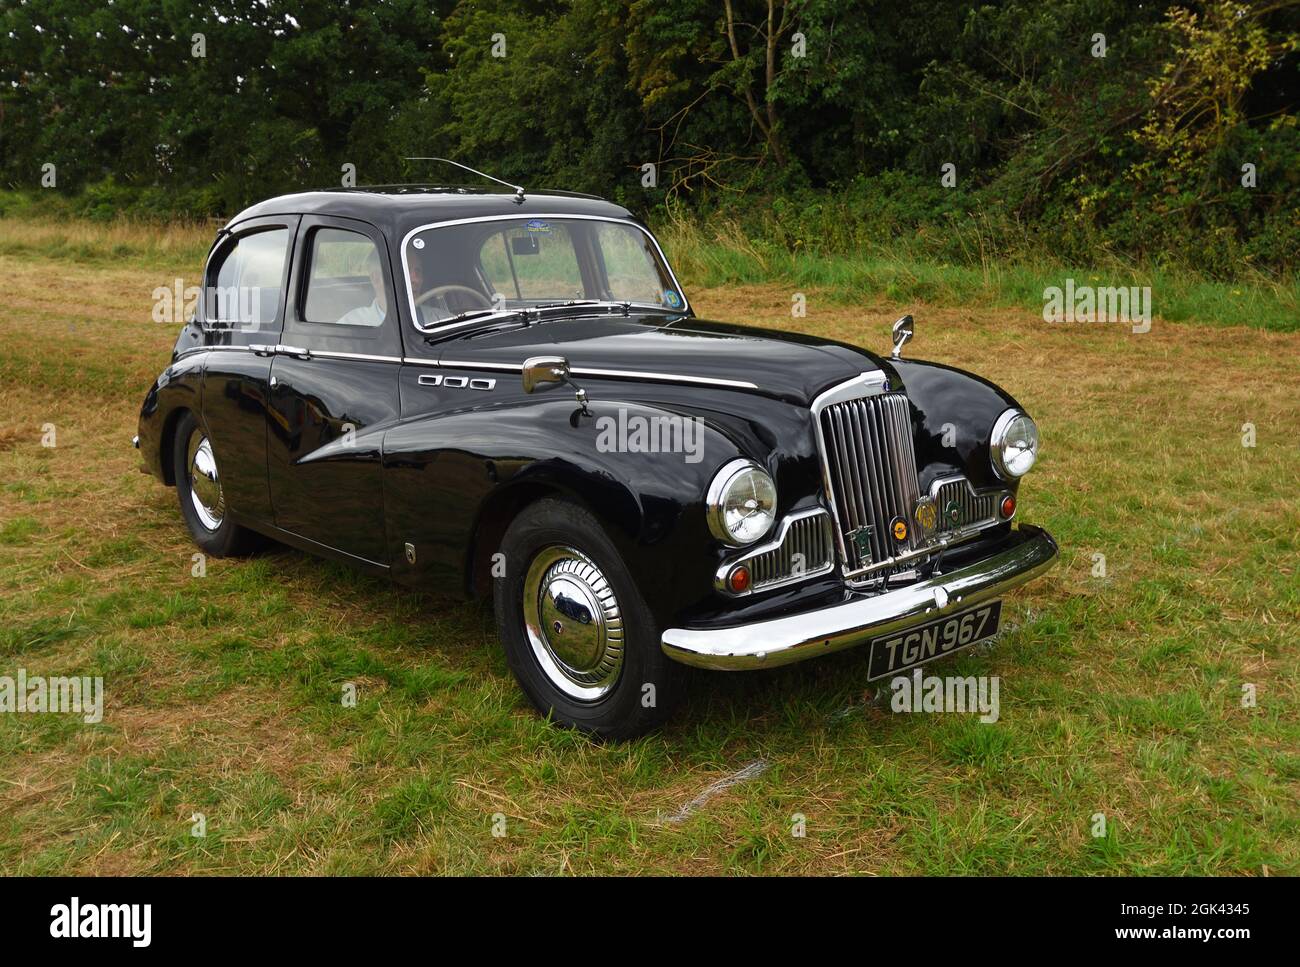 Classic Black Sunbeam 1956 Talbot 90 MK3 Motor Car parked isolated on grass. Stock Photo